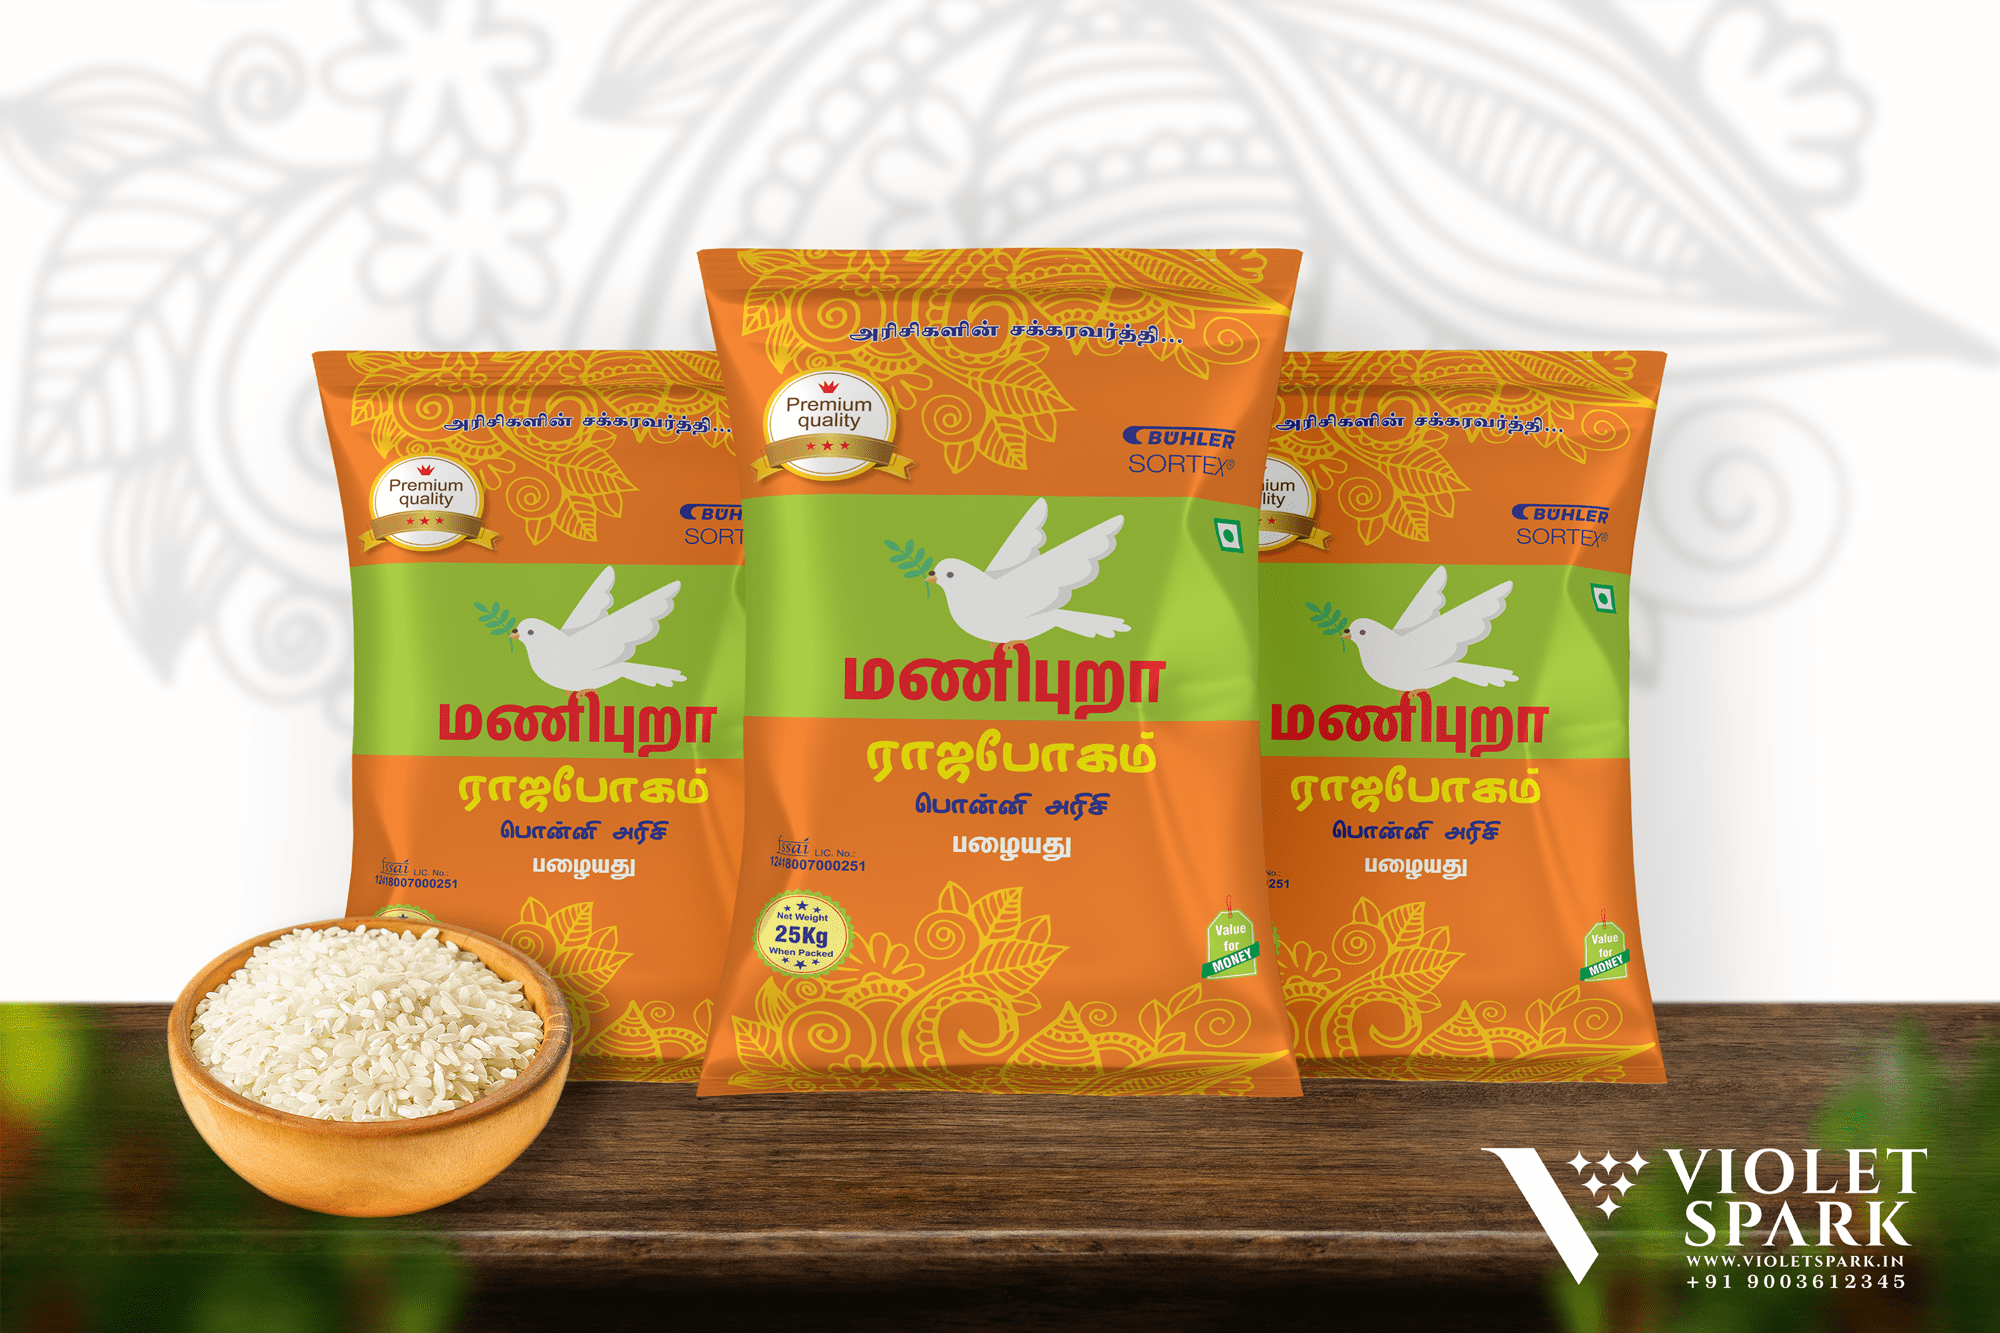 Manipura Brand Rajabhogam Rice Bags Branding & Packaging Design in Chennai by Violet Spark